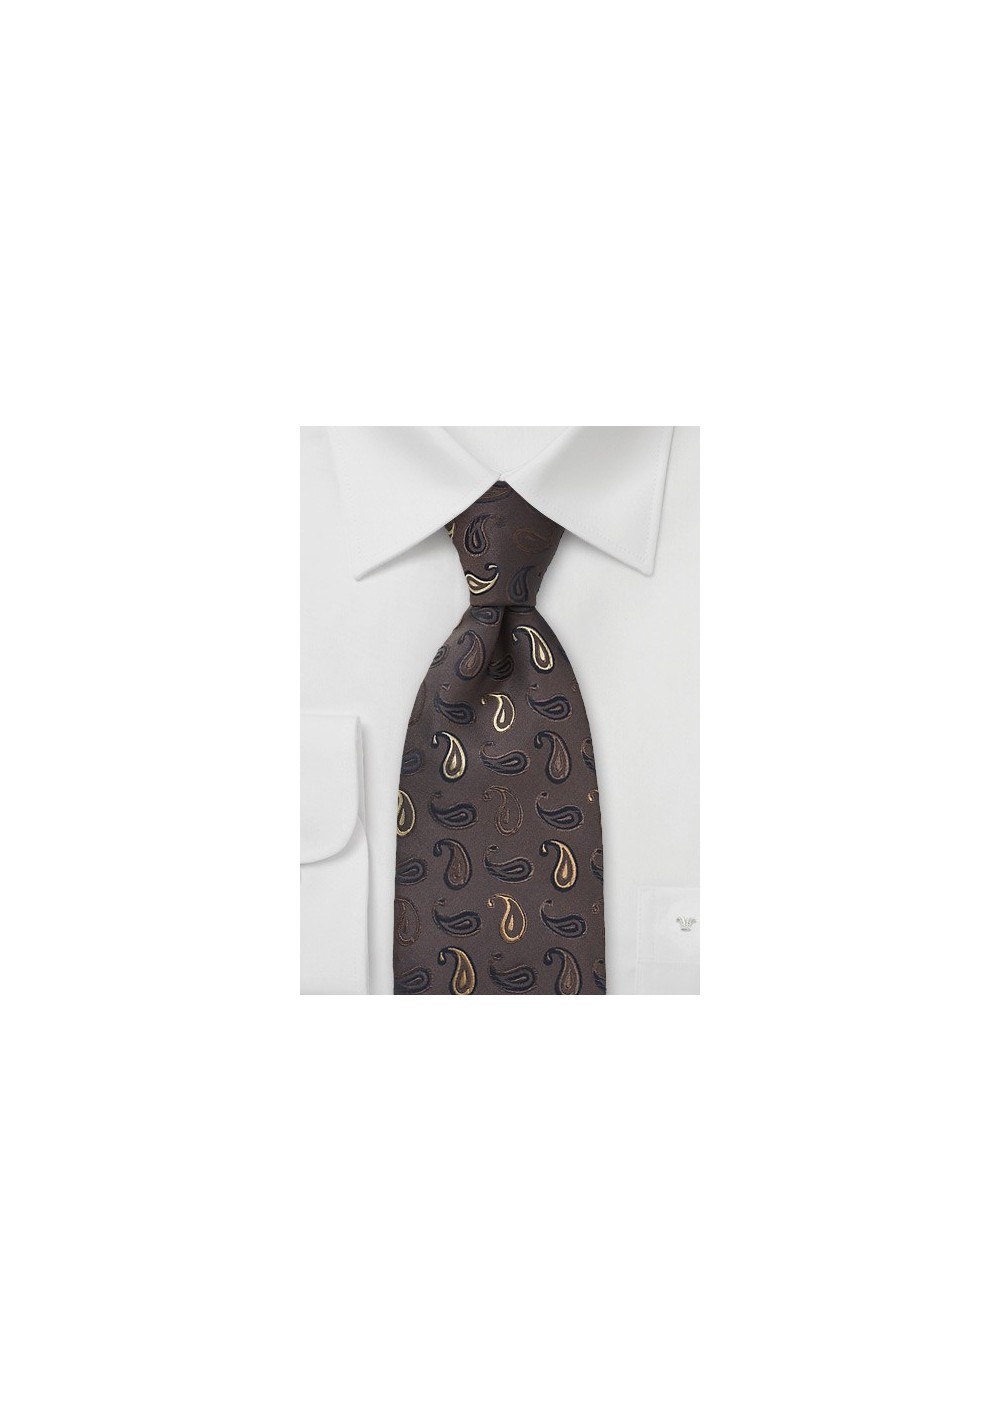 Truffle Brown Paisley Print Tie